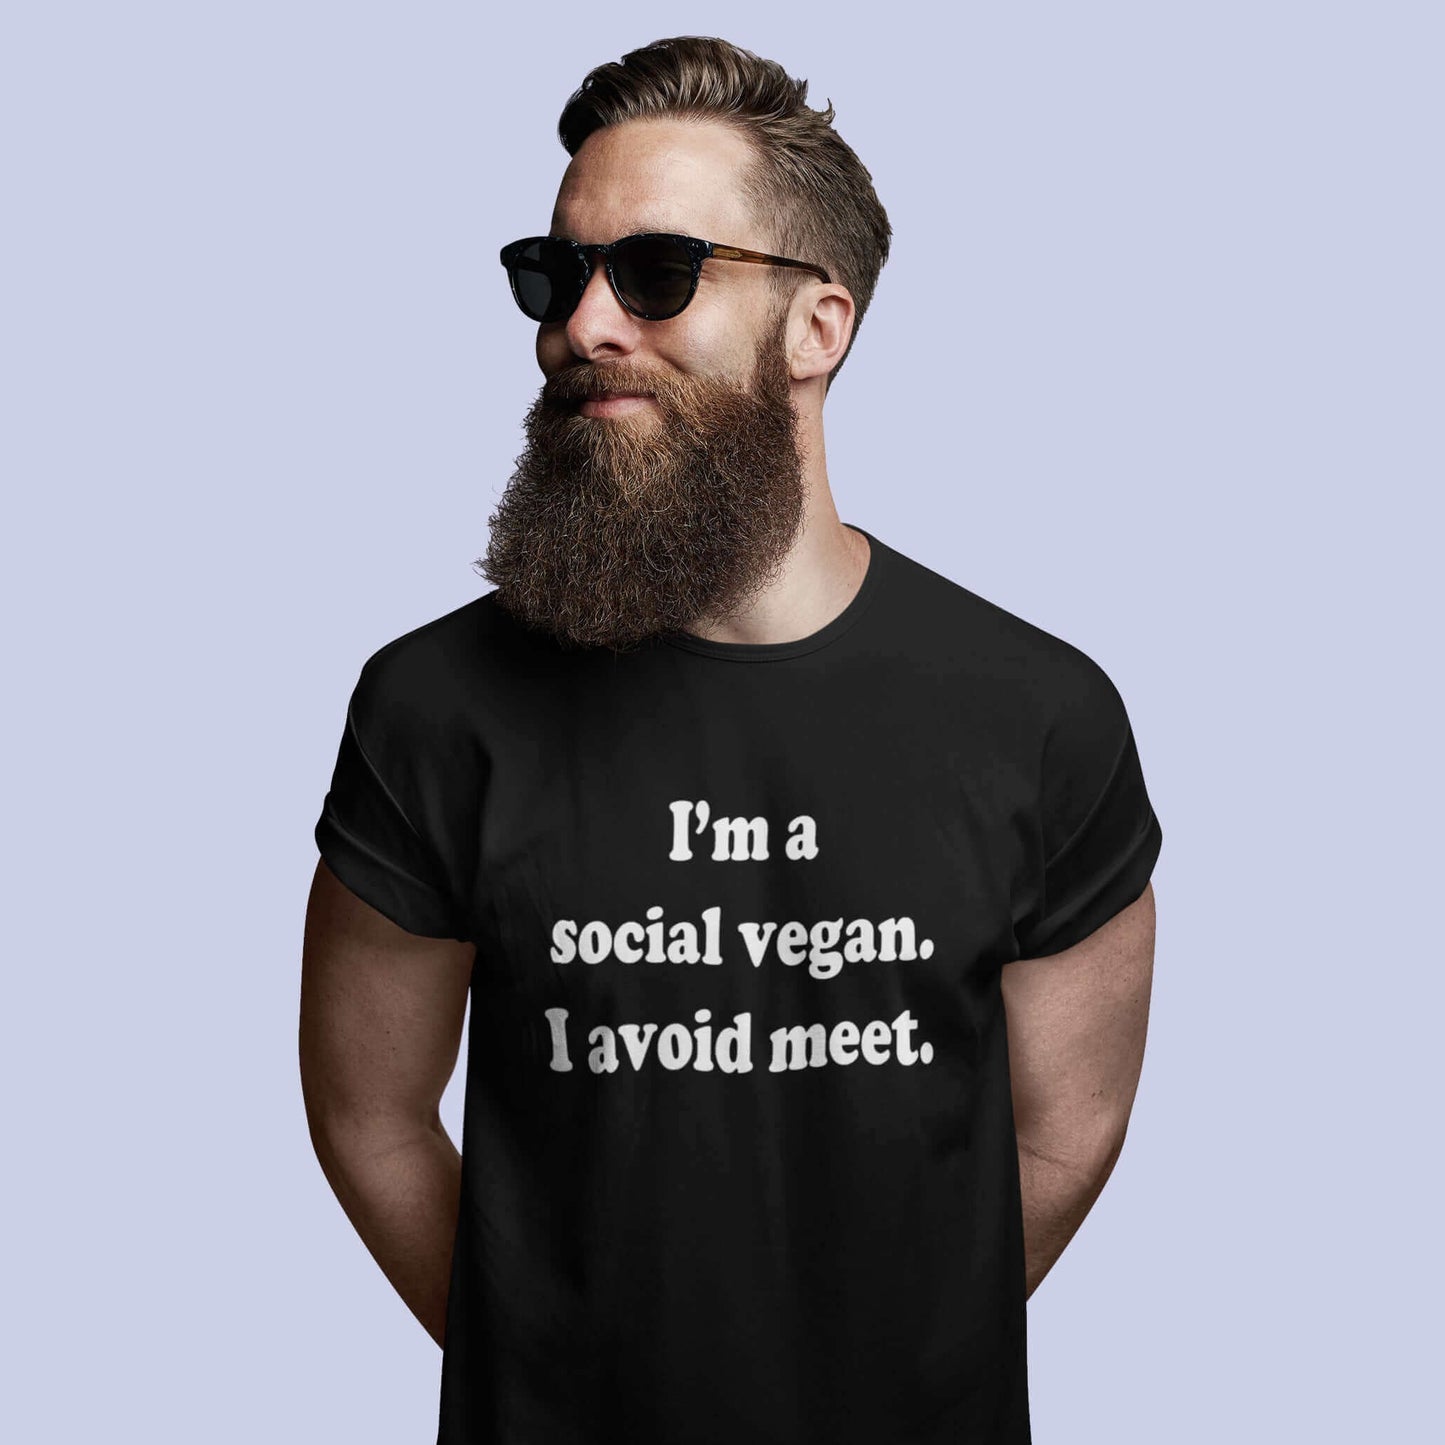 Funny social vegan silly pun t-shirt.